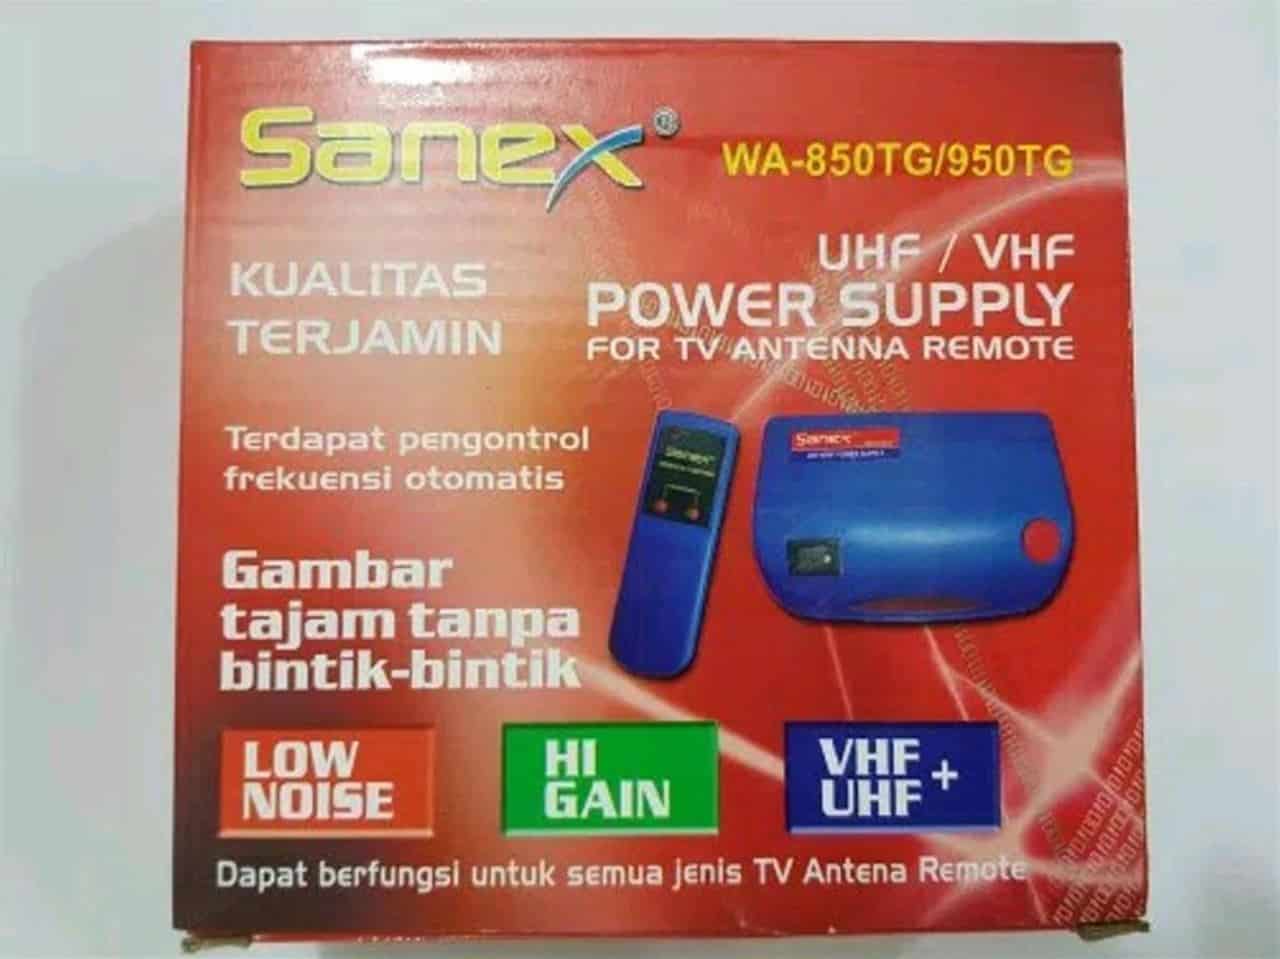 sanex-wa-850tg-950tg